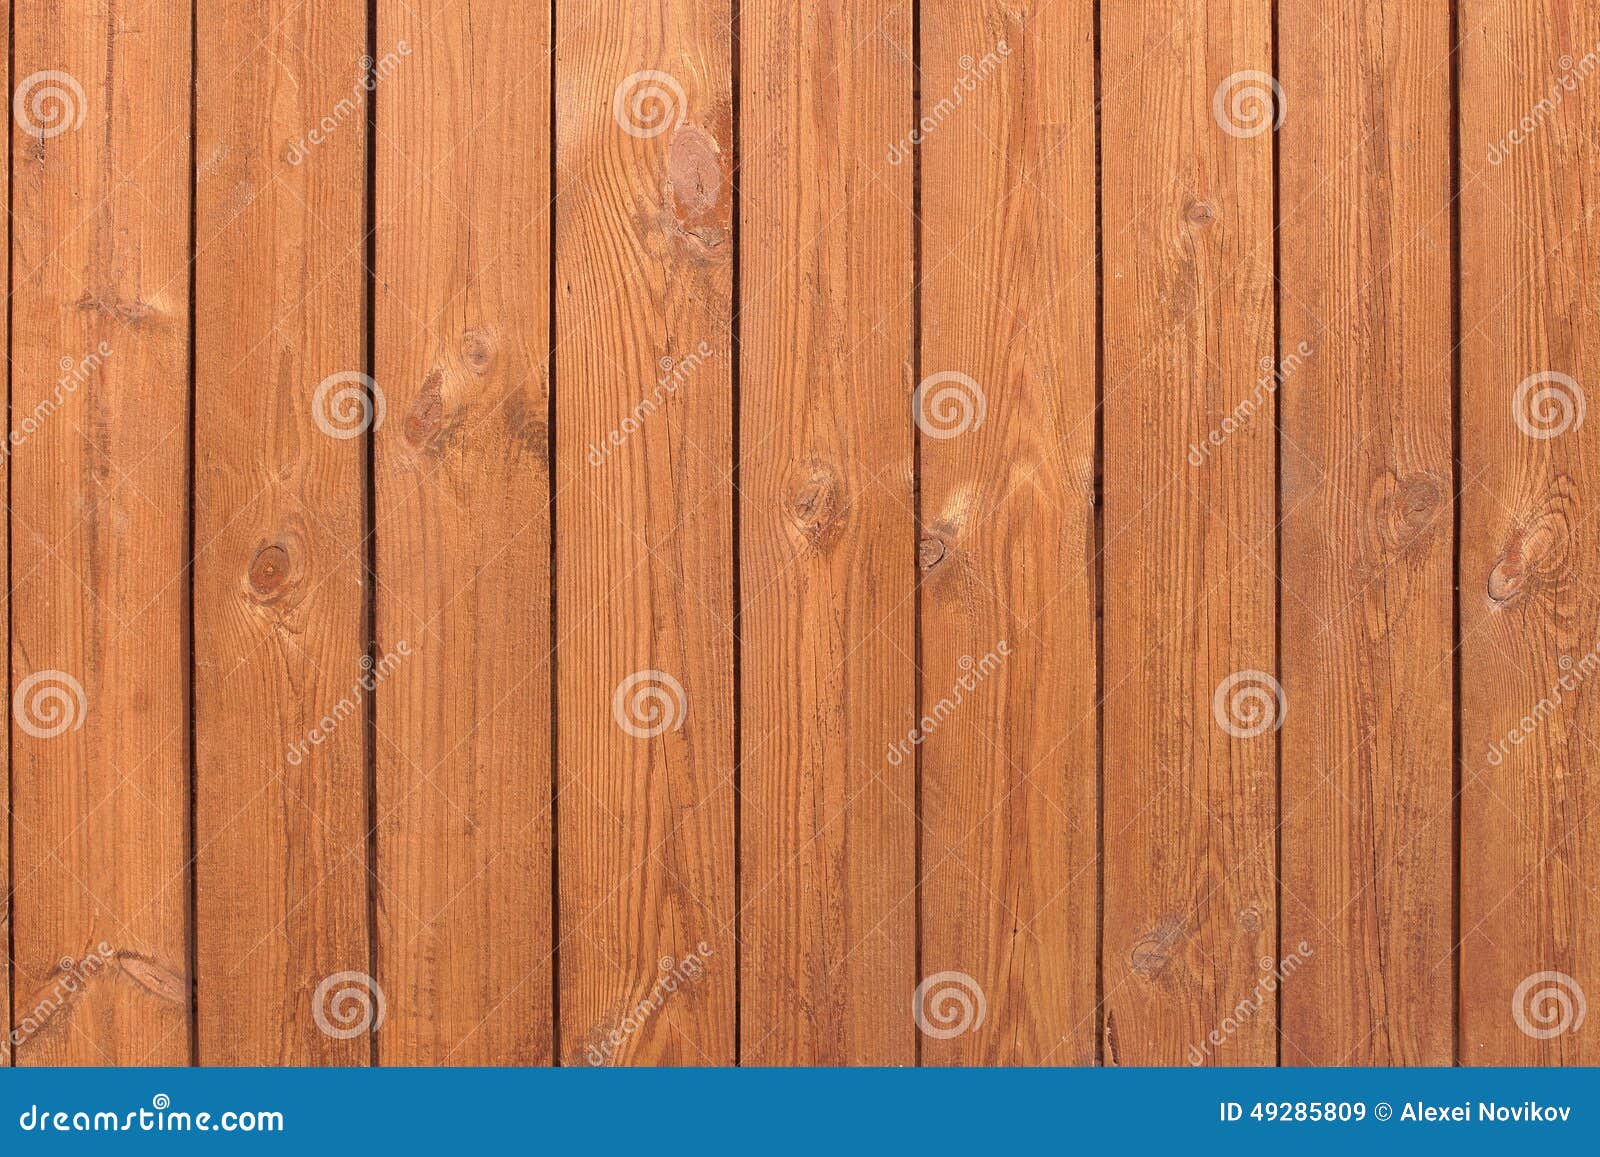 natural wooden slats brown panel